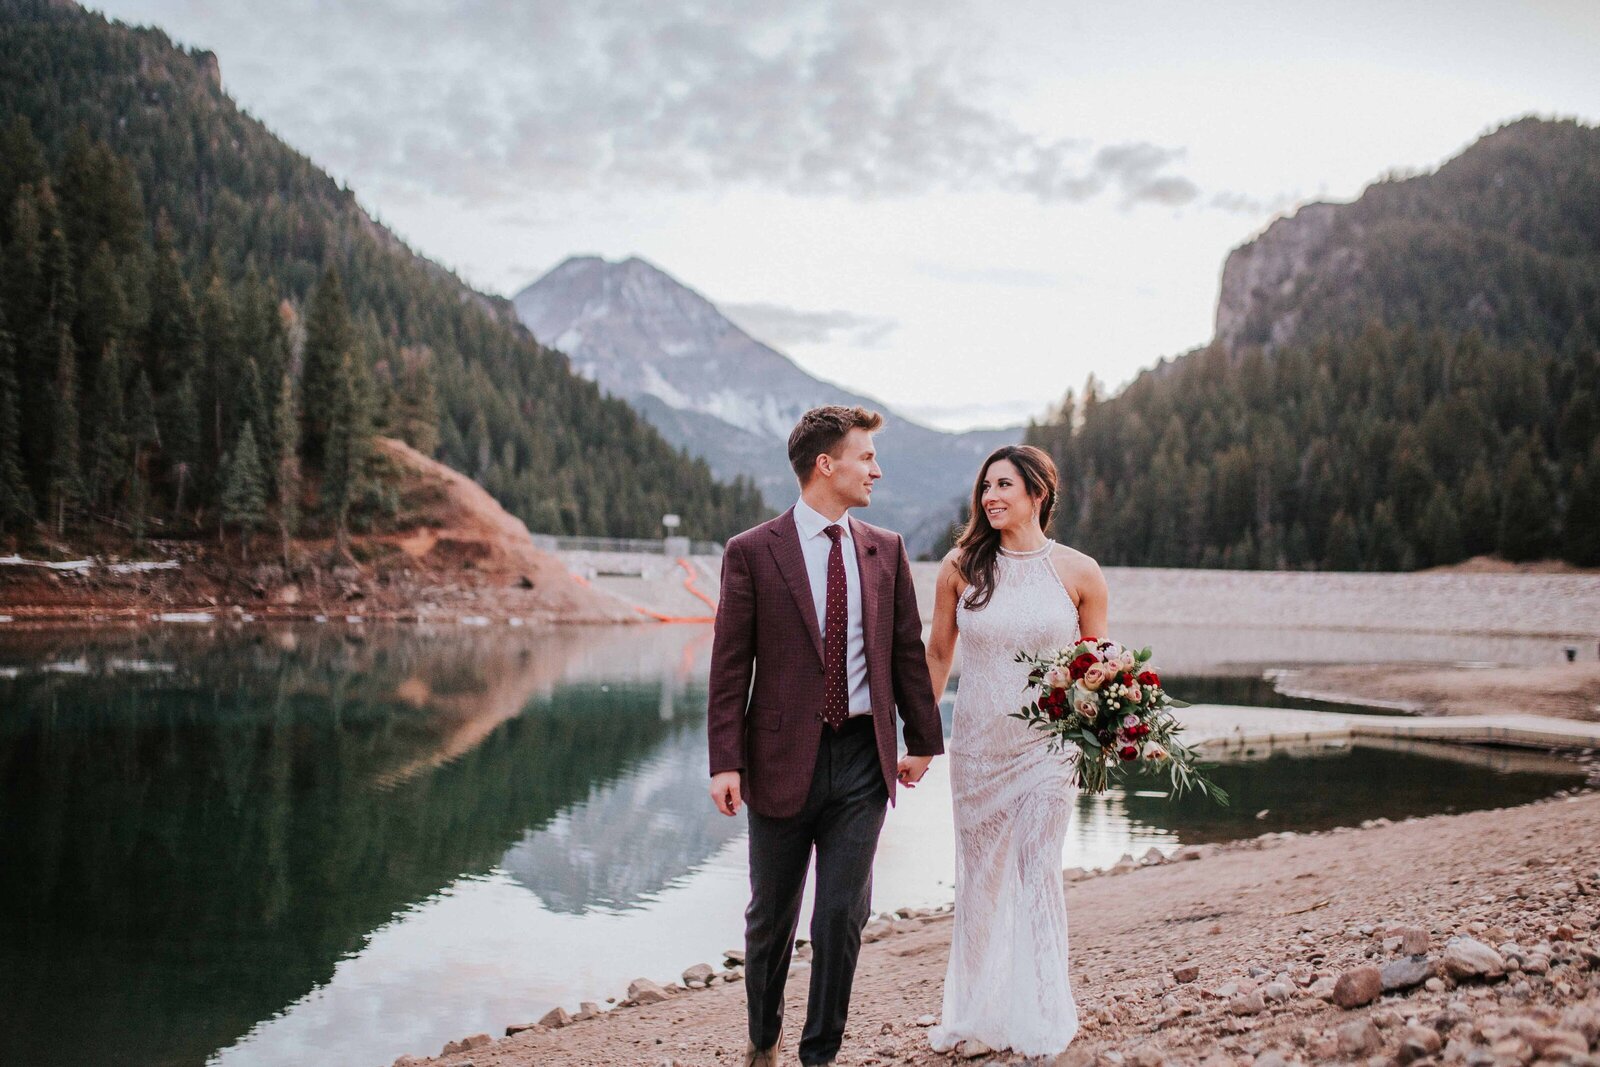 Sacramento Wedding Photographer captures bride and groom walking along Lake Tahoe